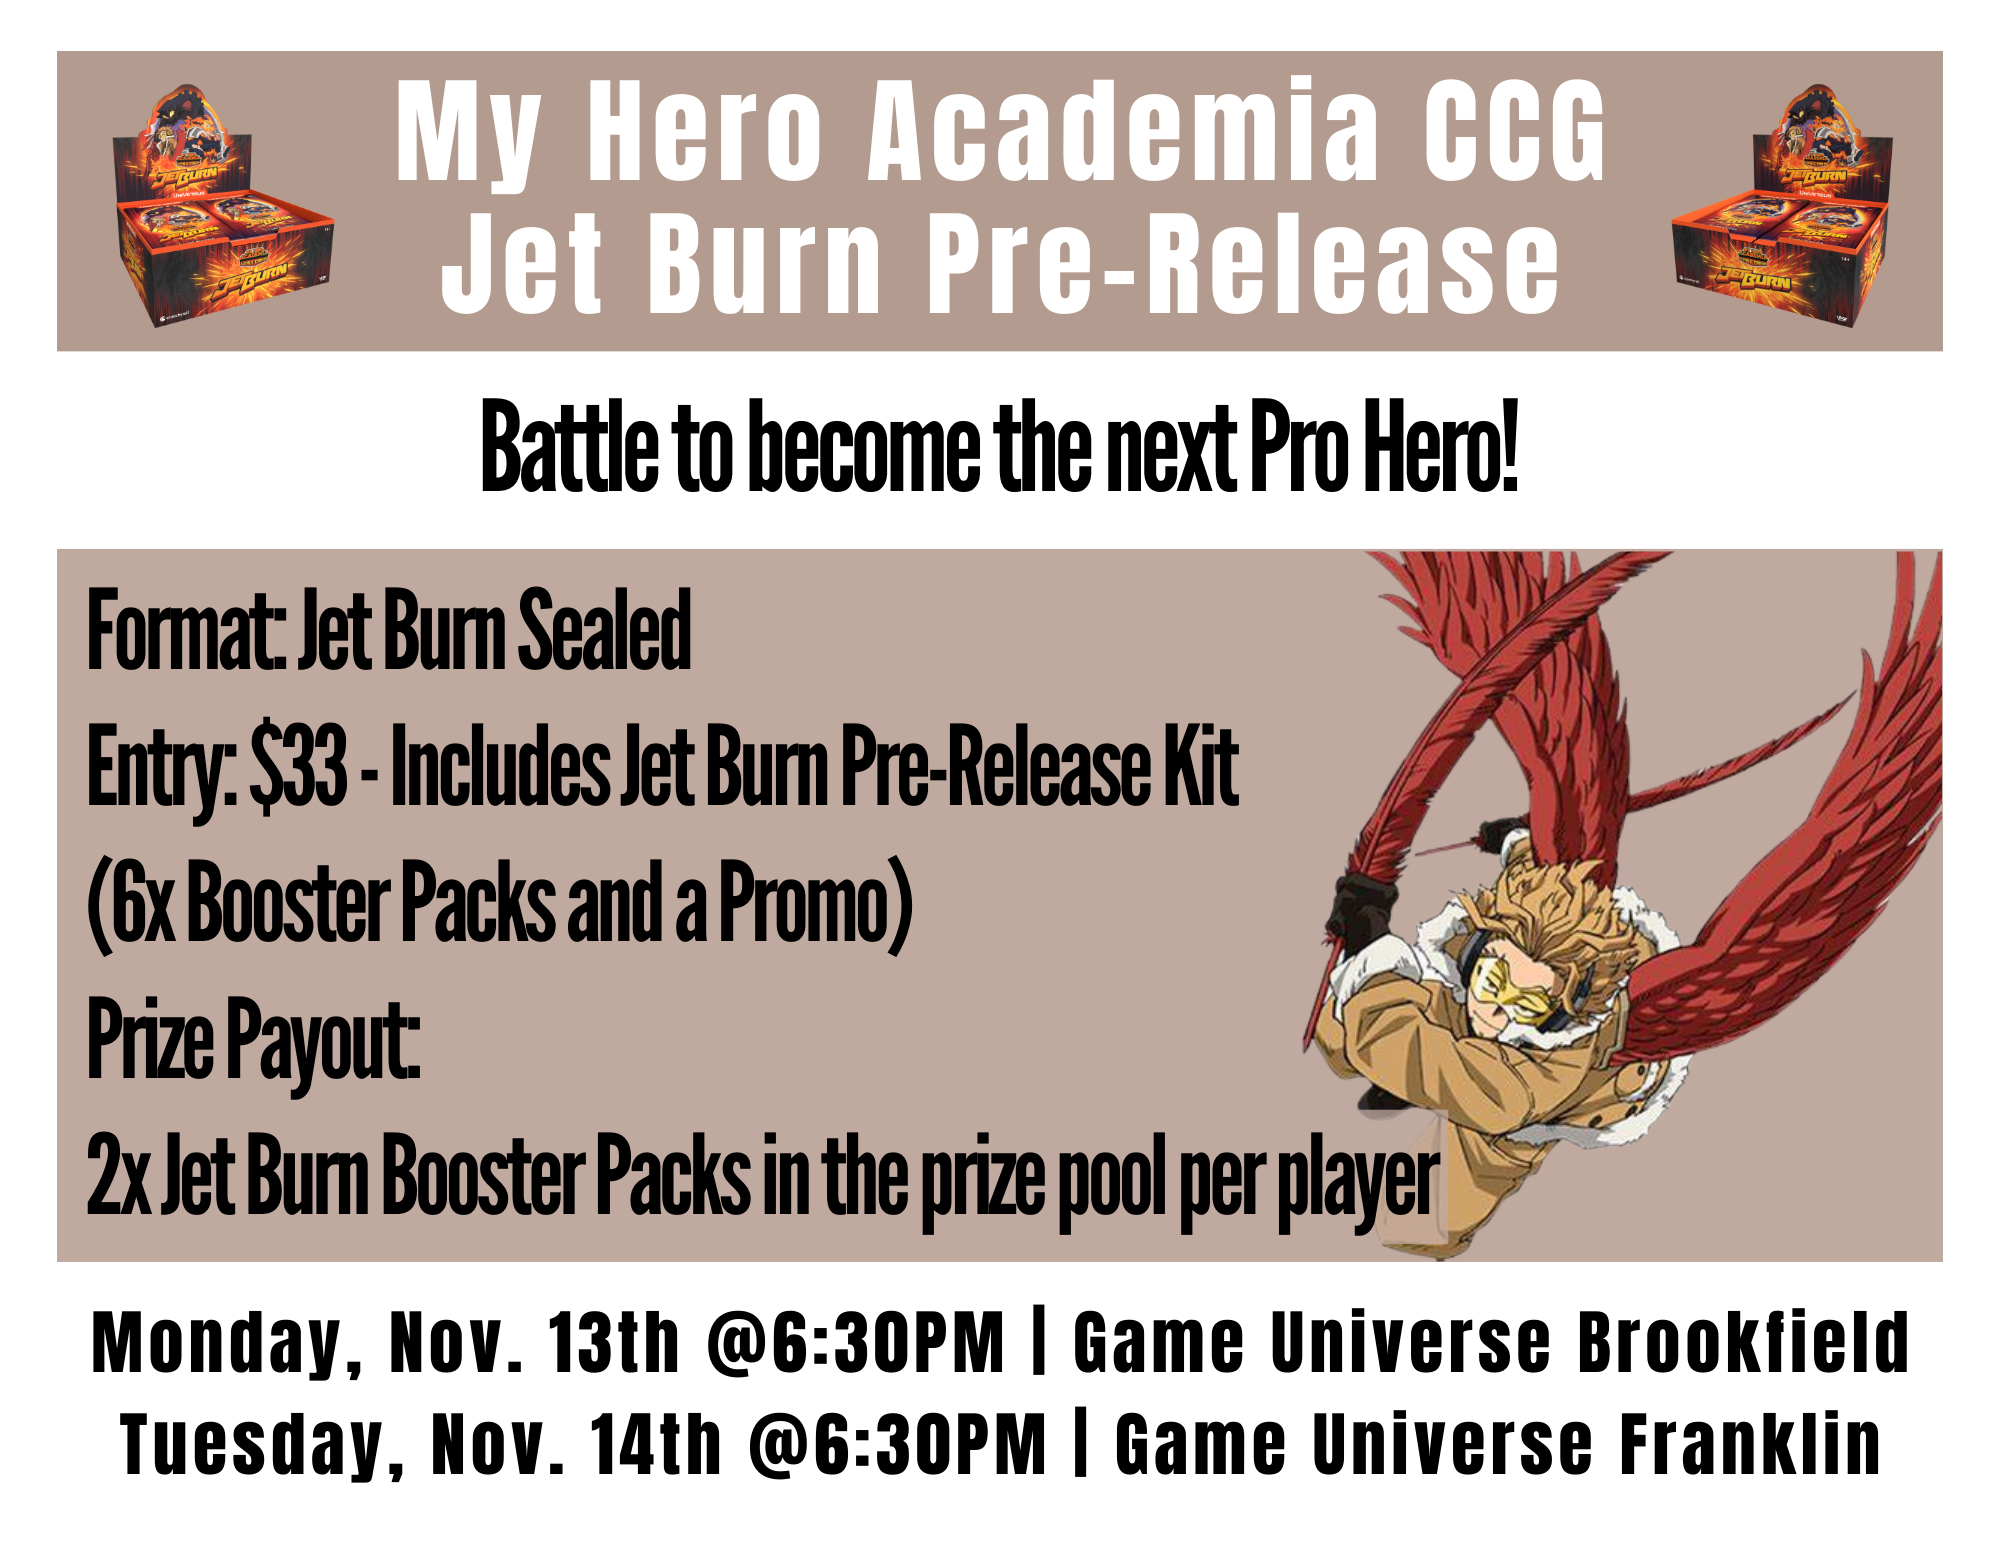 My Hero Academia CCG - Jet Burn Pre-Release, Game Universe